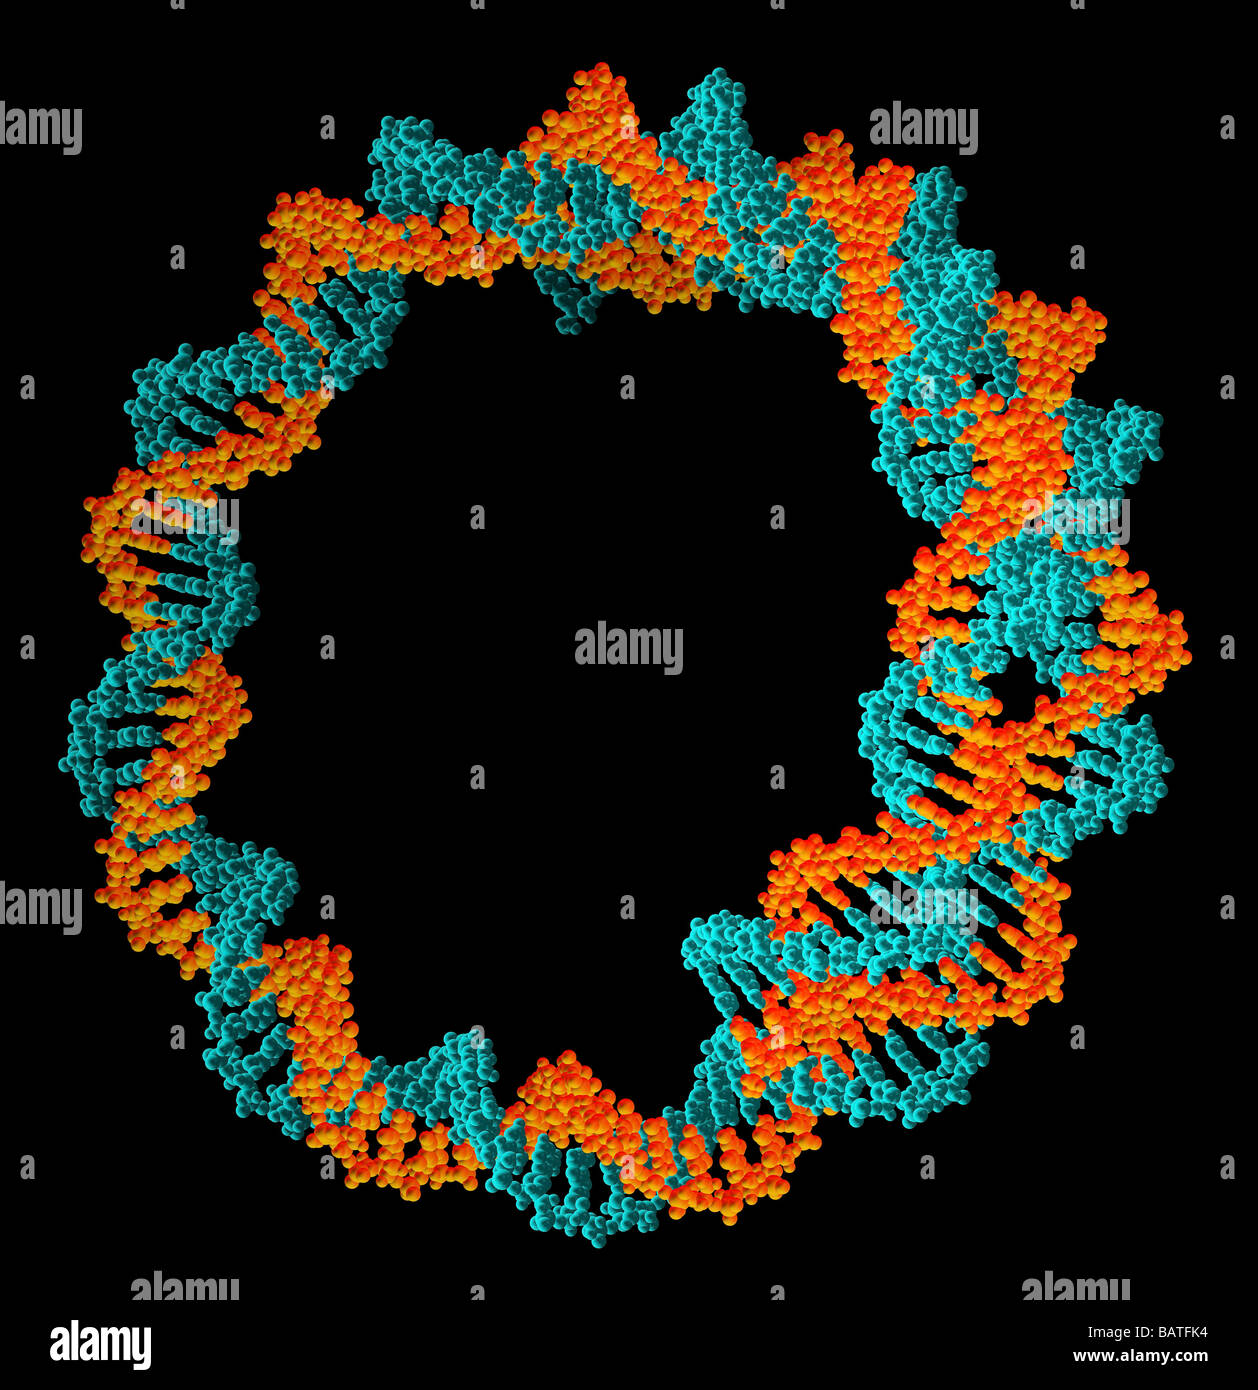 Circular DNA (deoxyribonucleic acid) molecule,computer artwork. Circular DNA has no ends, but consists of a ring structure. Stock Photo